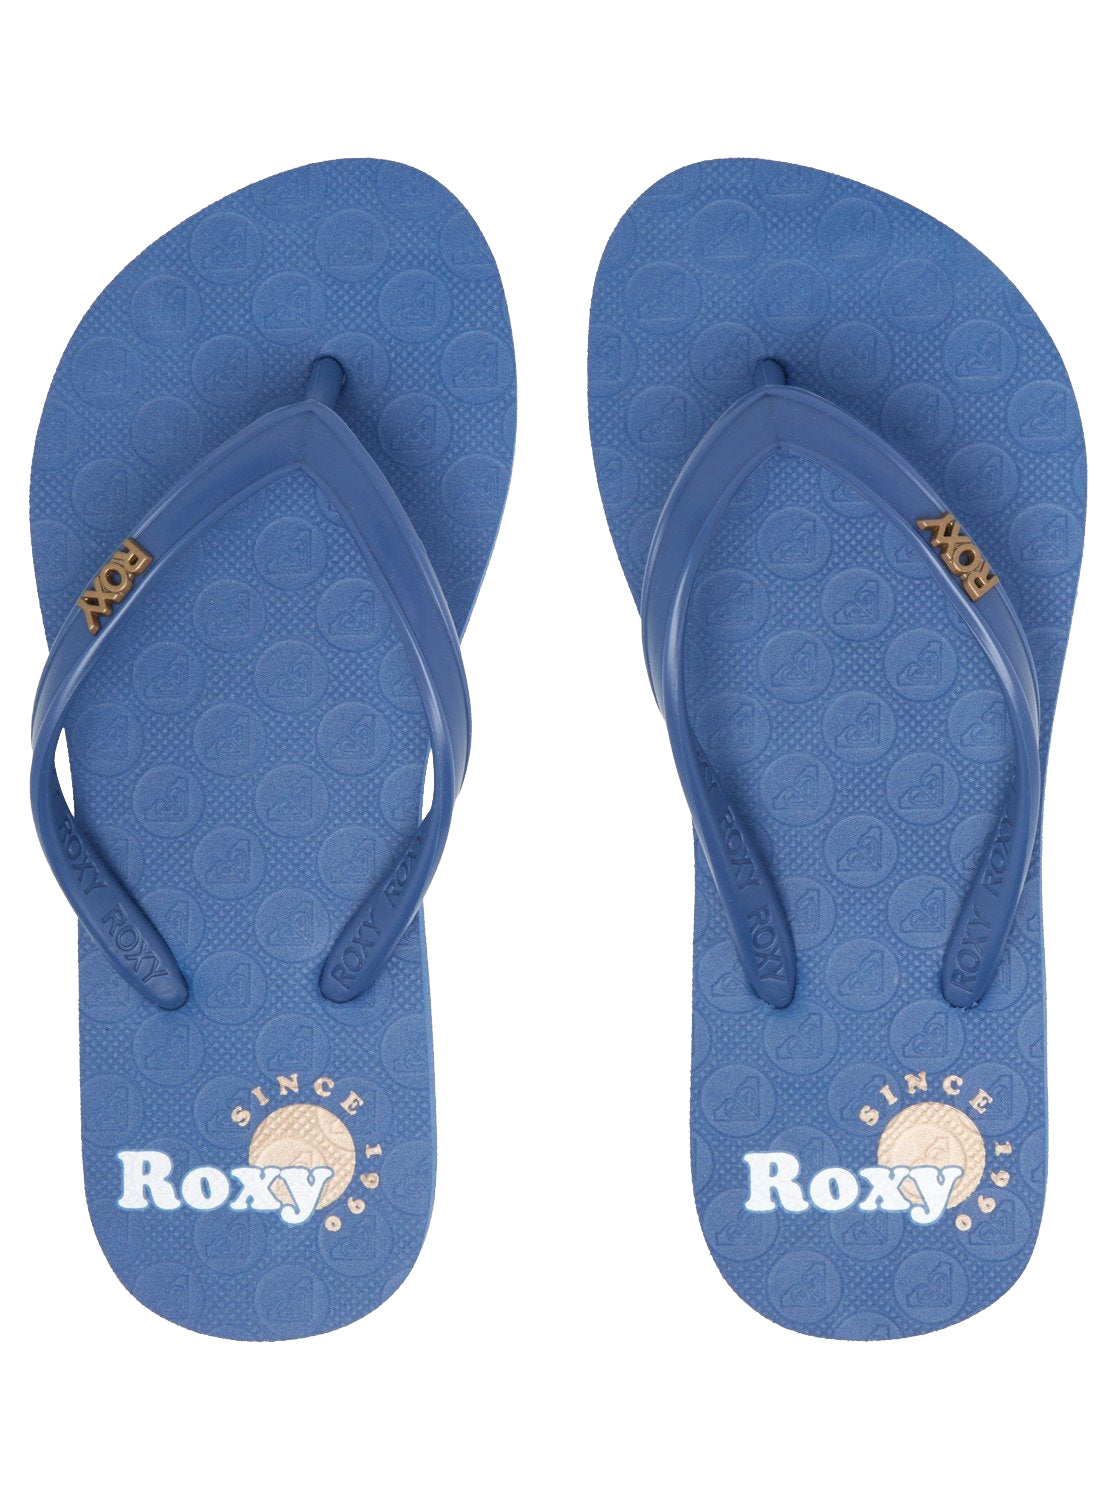 Roxy Viva Stamp 2 Girls Sandal BJL-Baja Blue 11 C